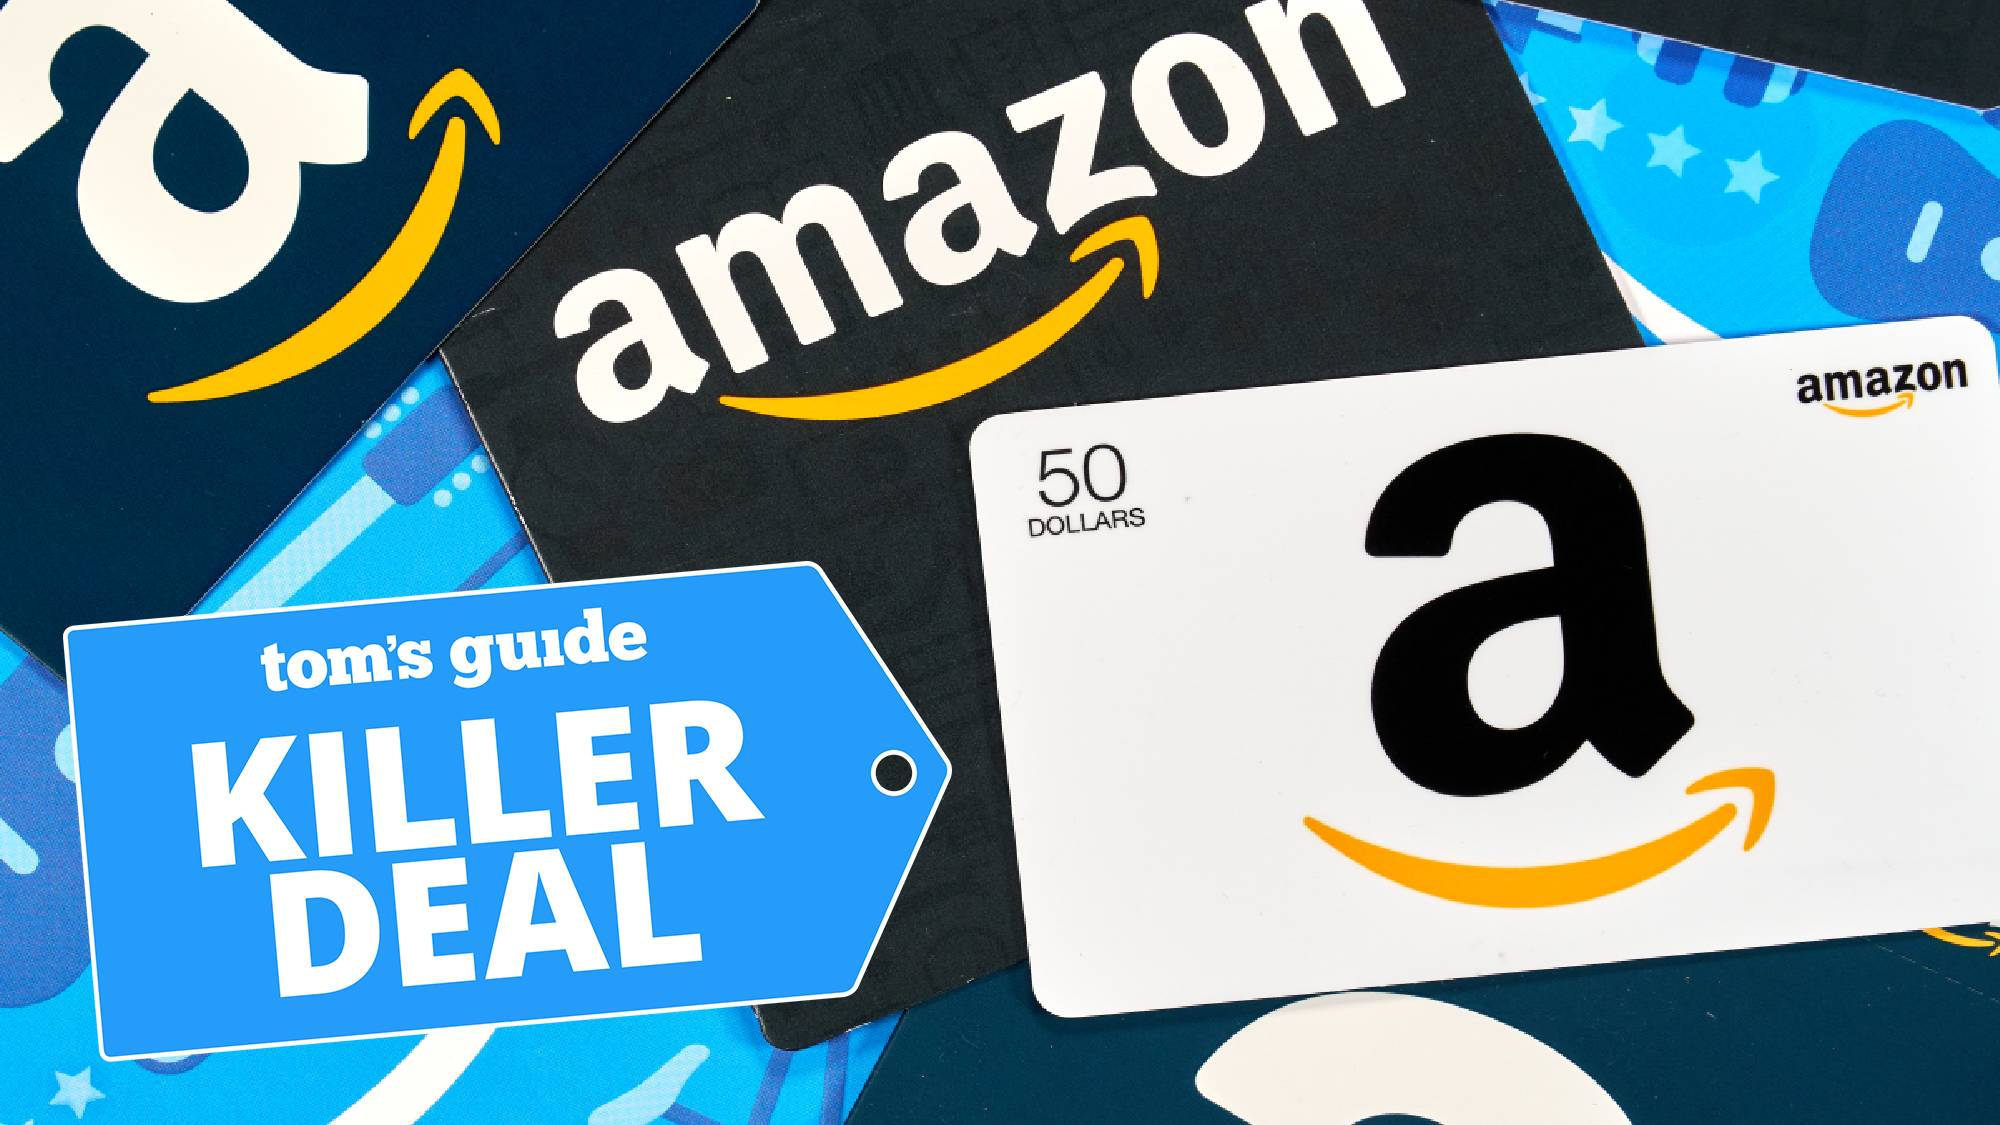 Amazon gift Card deals